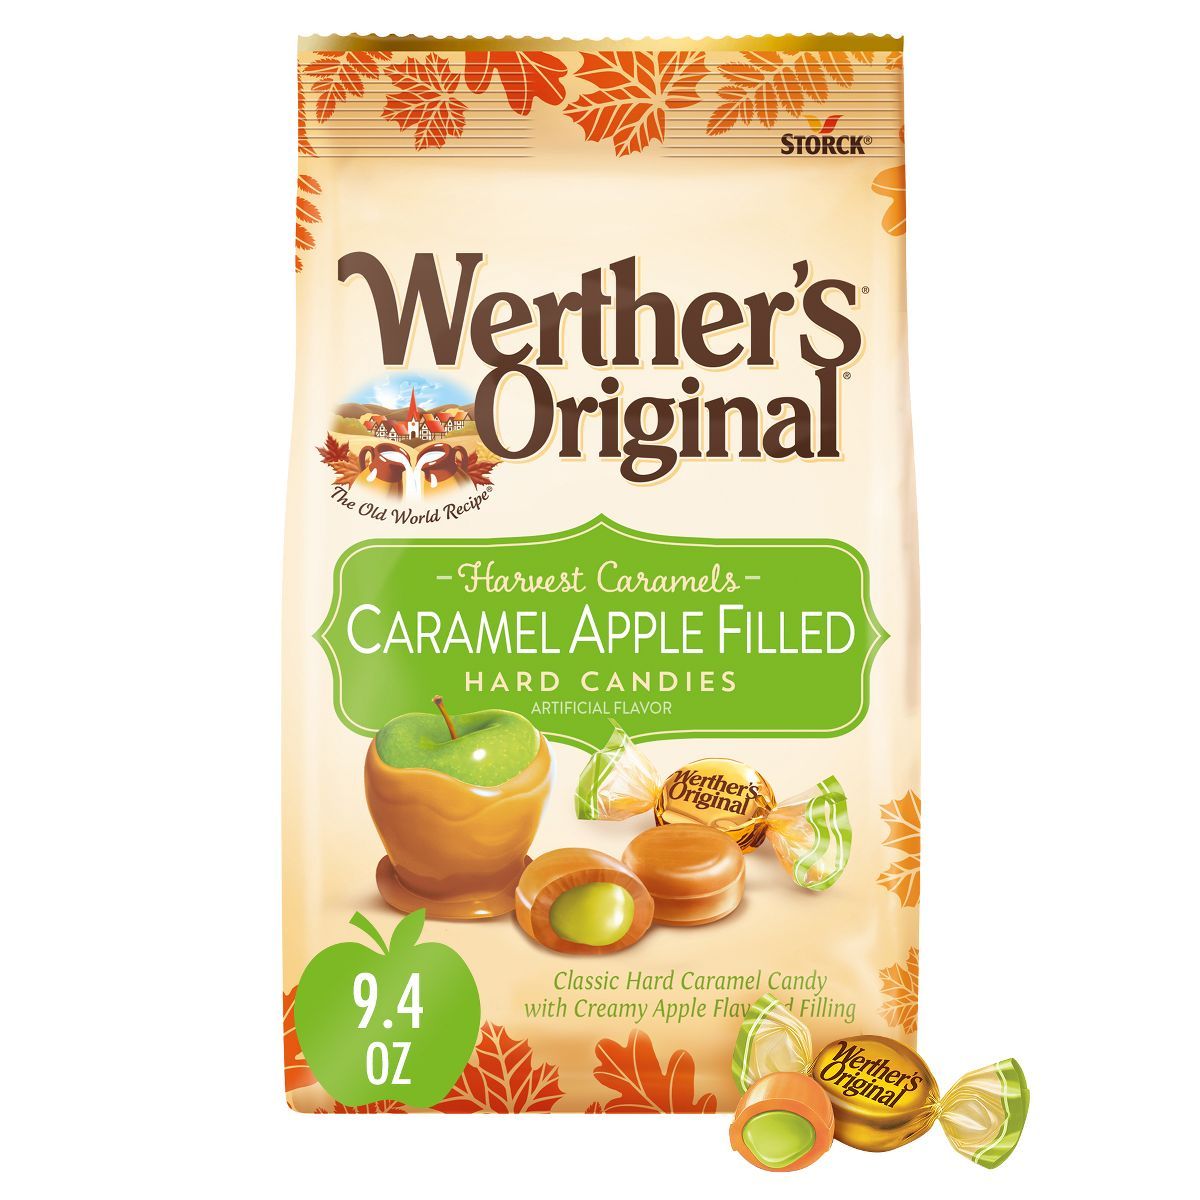 Werther's Original Halloween Harvest Caramel Apple Filled Hard Candies - 9.4oz | Target